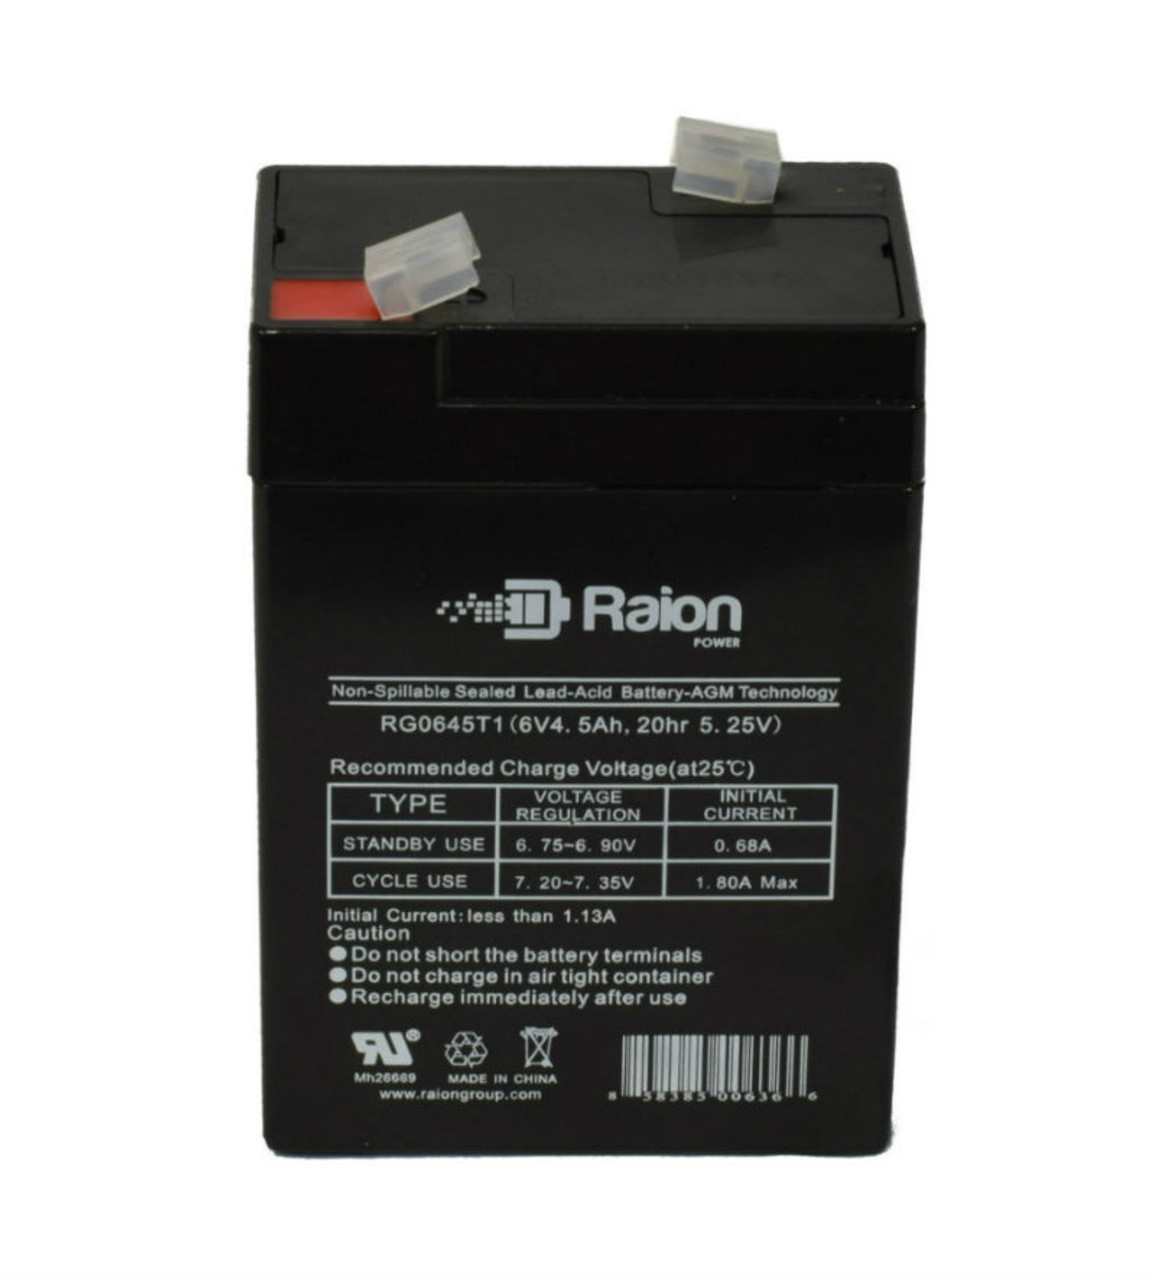 Raion Power RG0645T1 Replacement Battery Cartridge for Wonderlanes 12724 Lil Backhoe